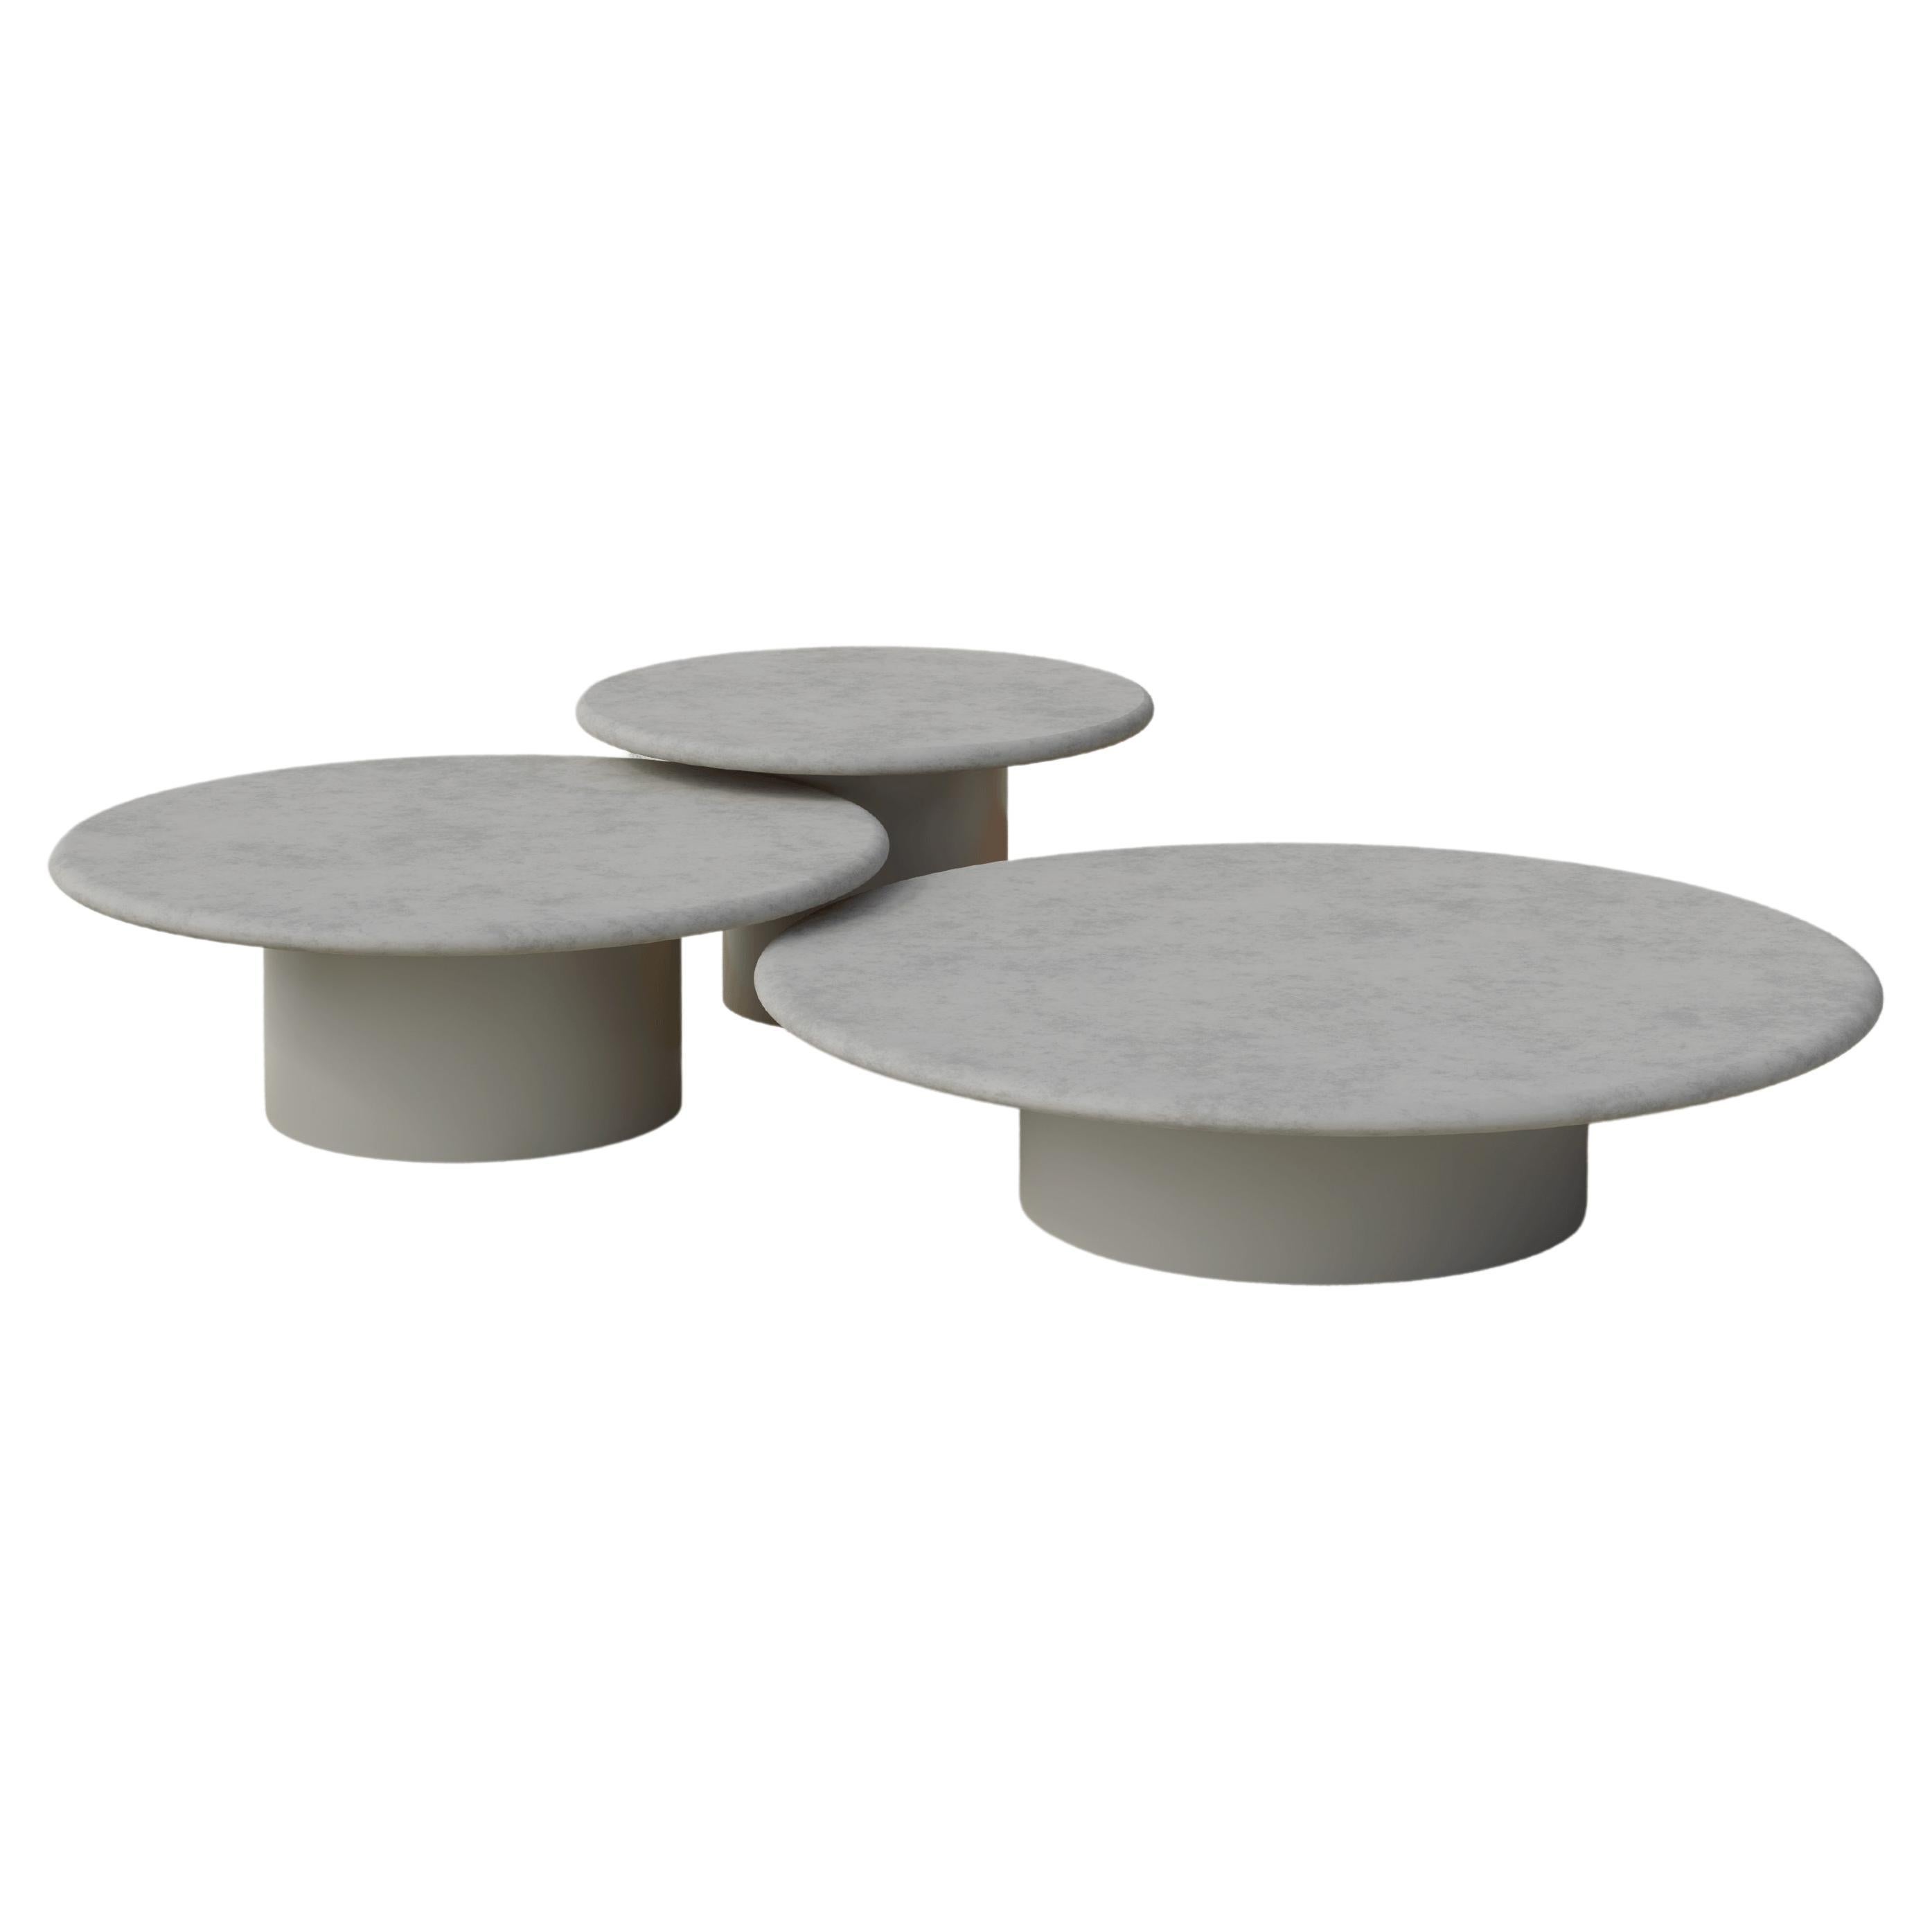 Raindrop Coffee Table Set, 600, 800, 1000, Microcrete / Pebble Grey For Sale